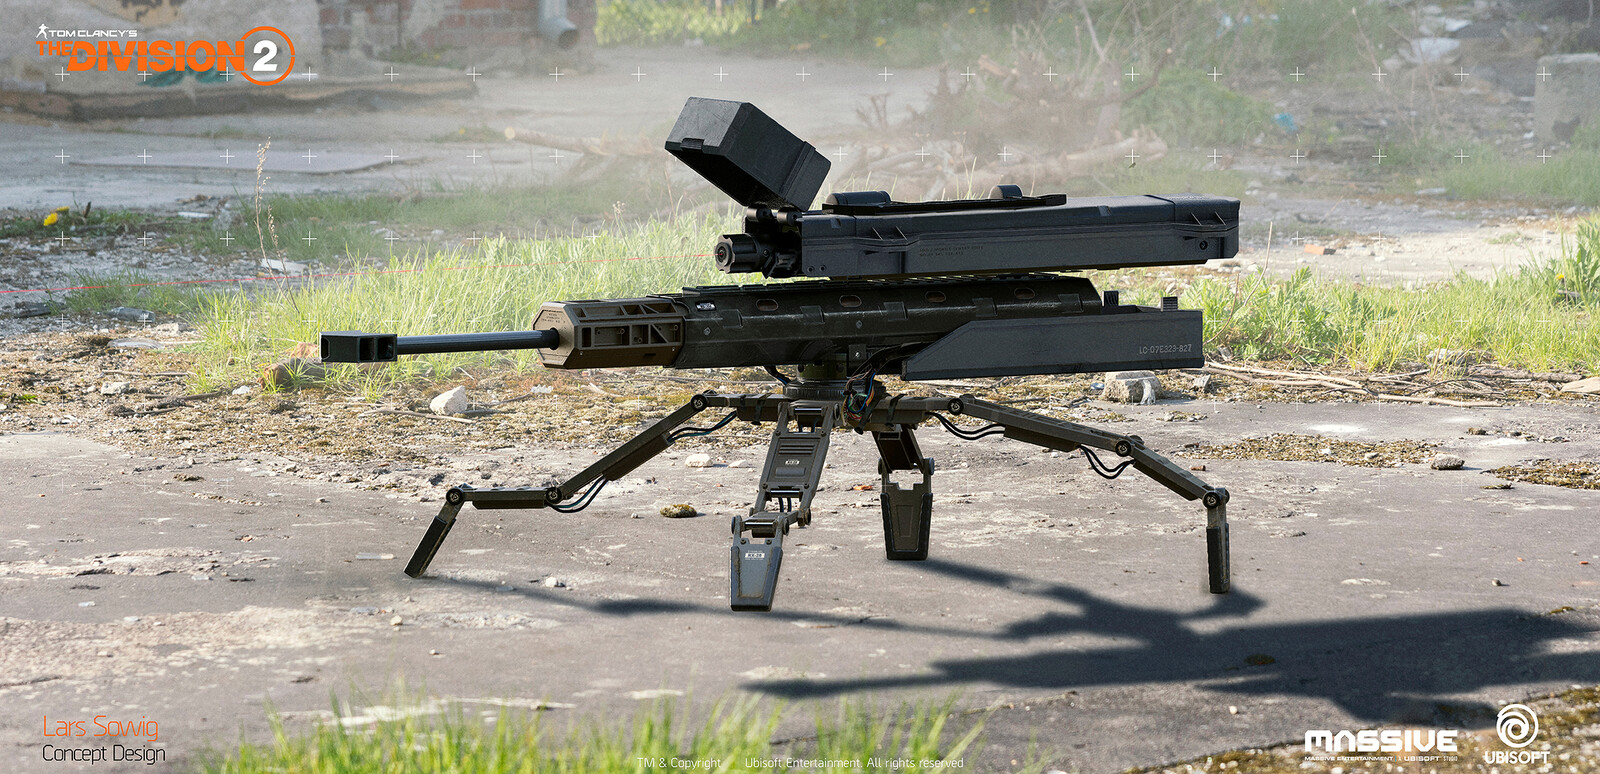 Sniper Turret Concept